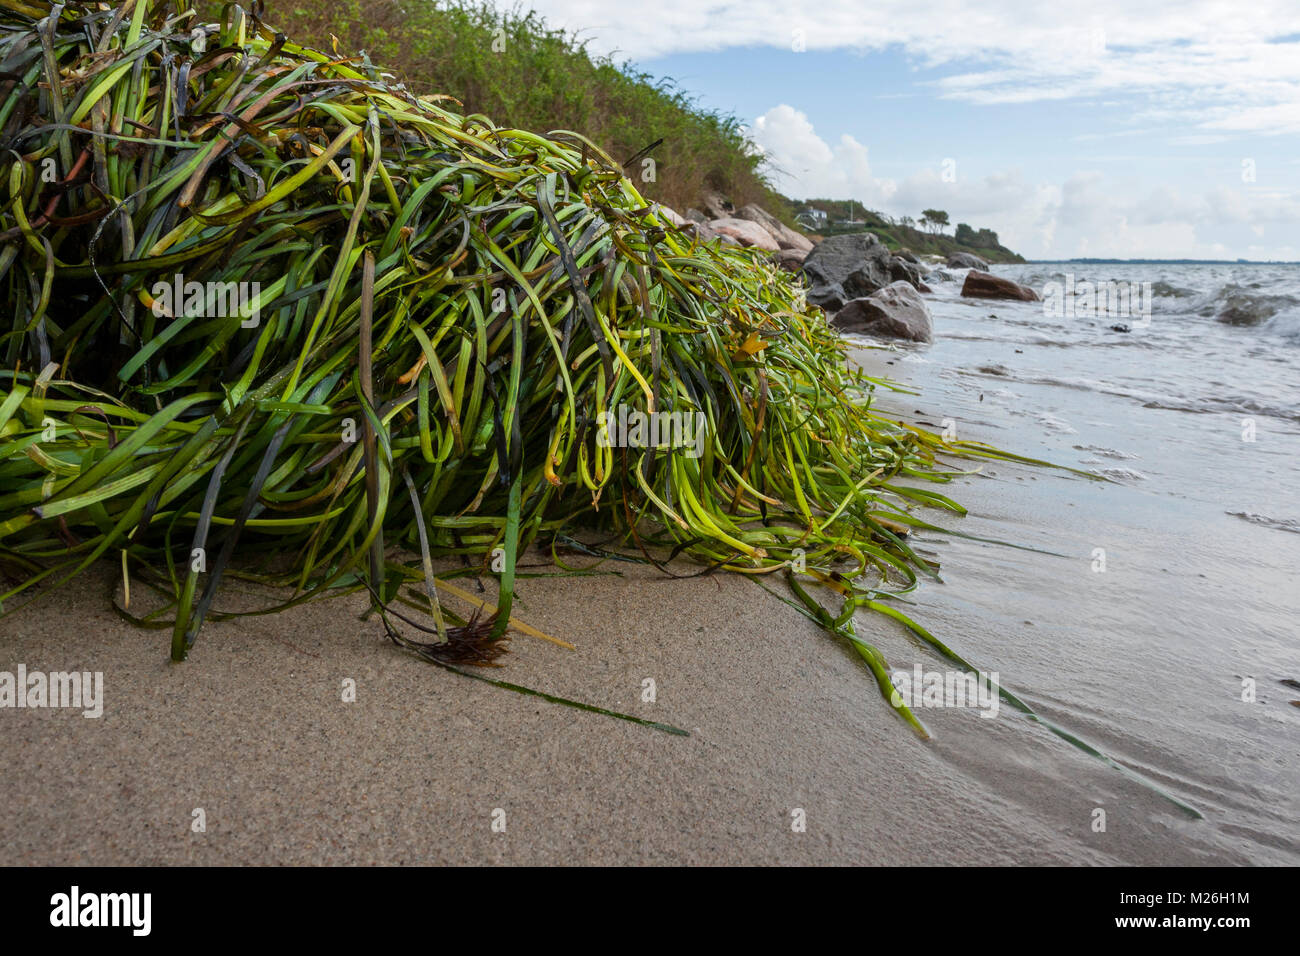 Washed up Eelgrass (Zostera marina) on the beach Stock Photo